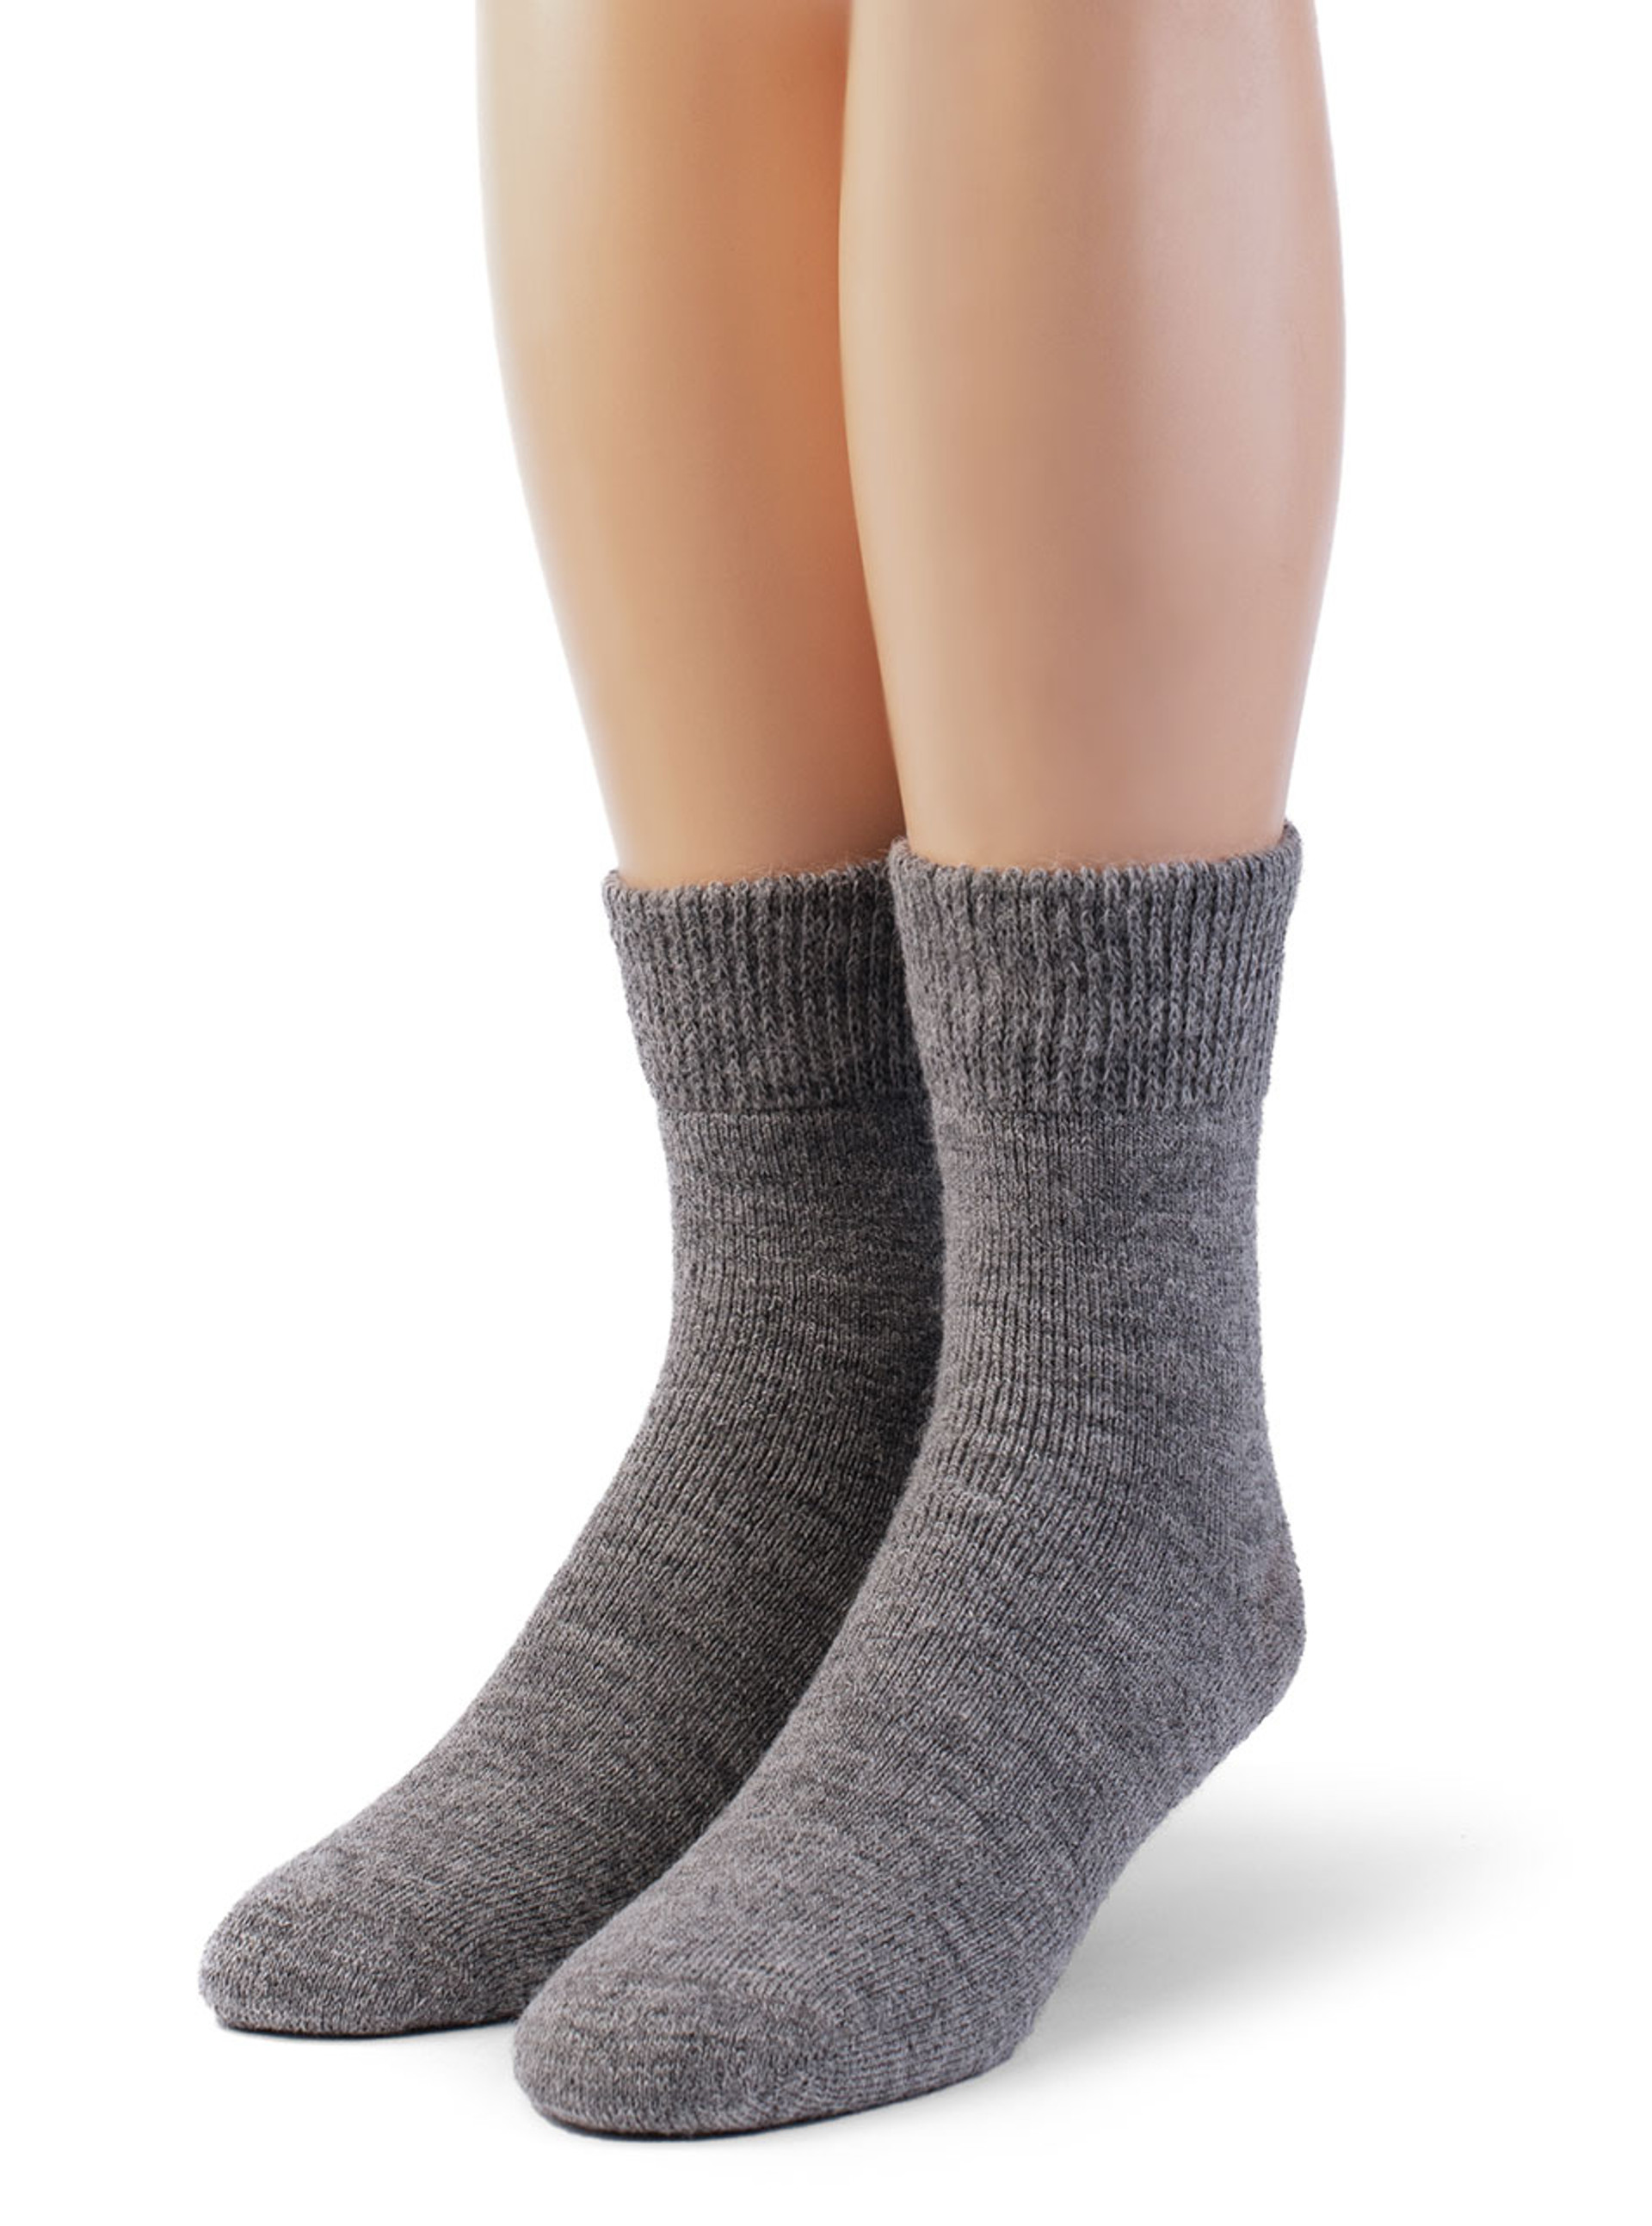 Outdoor Terry Lined Ankle Alpaca Wool Socks for Men & Women | Warrior ...